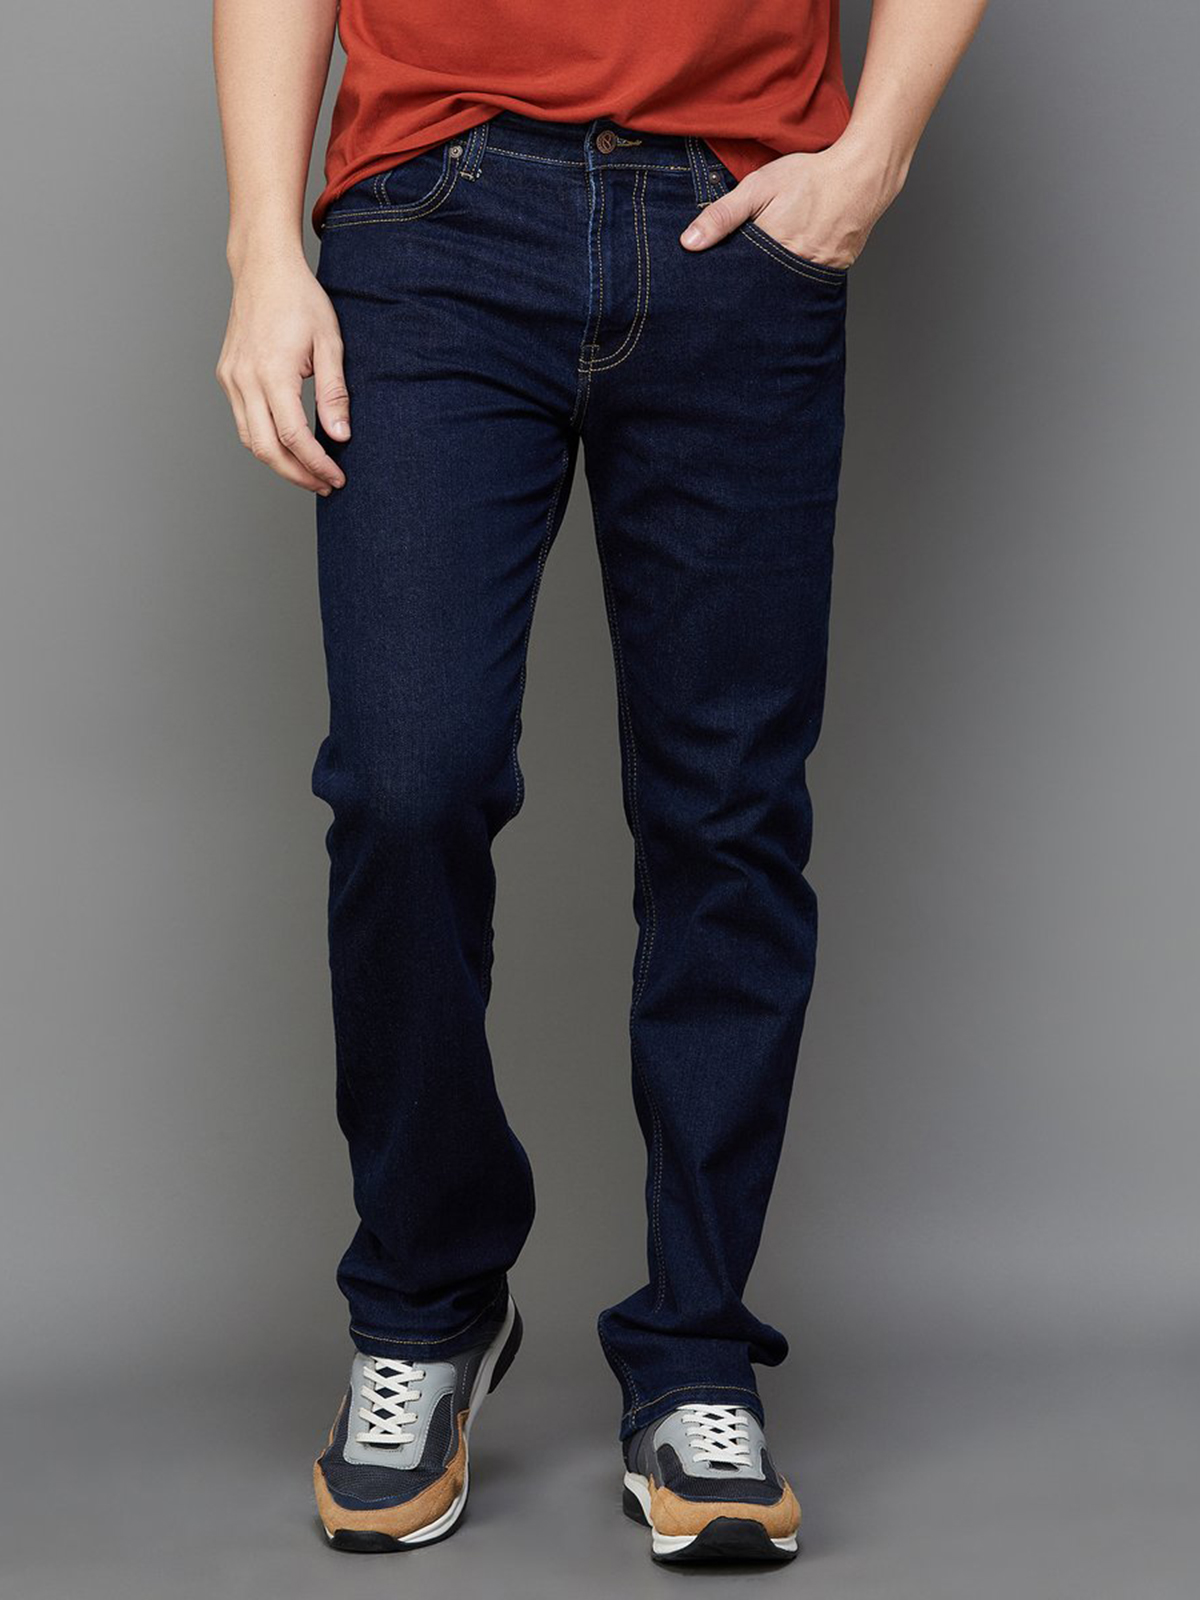 Pepe Jeans solid dark regular G3-MJE4337 jeans fit navy 